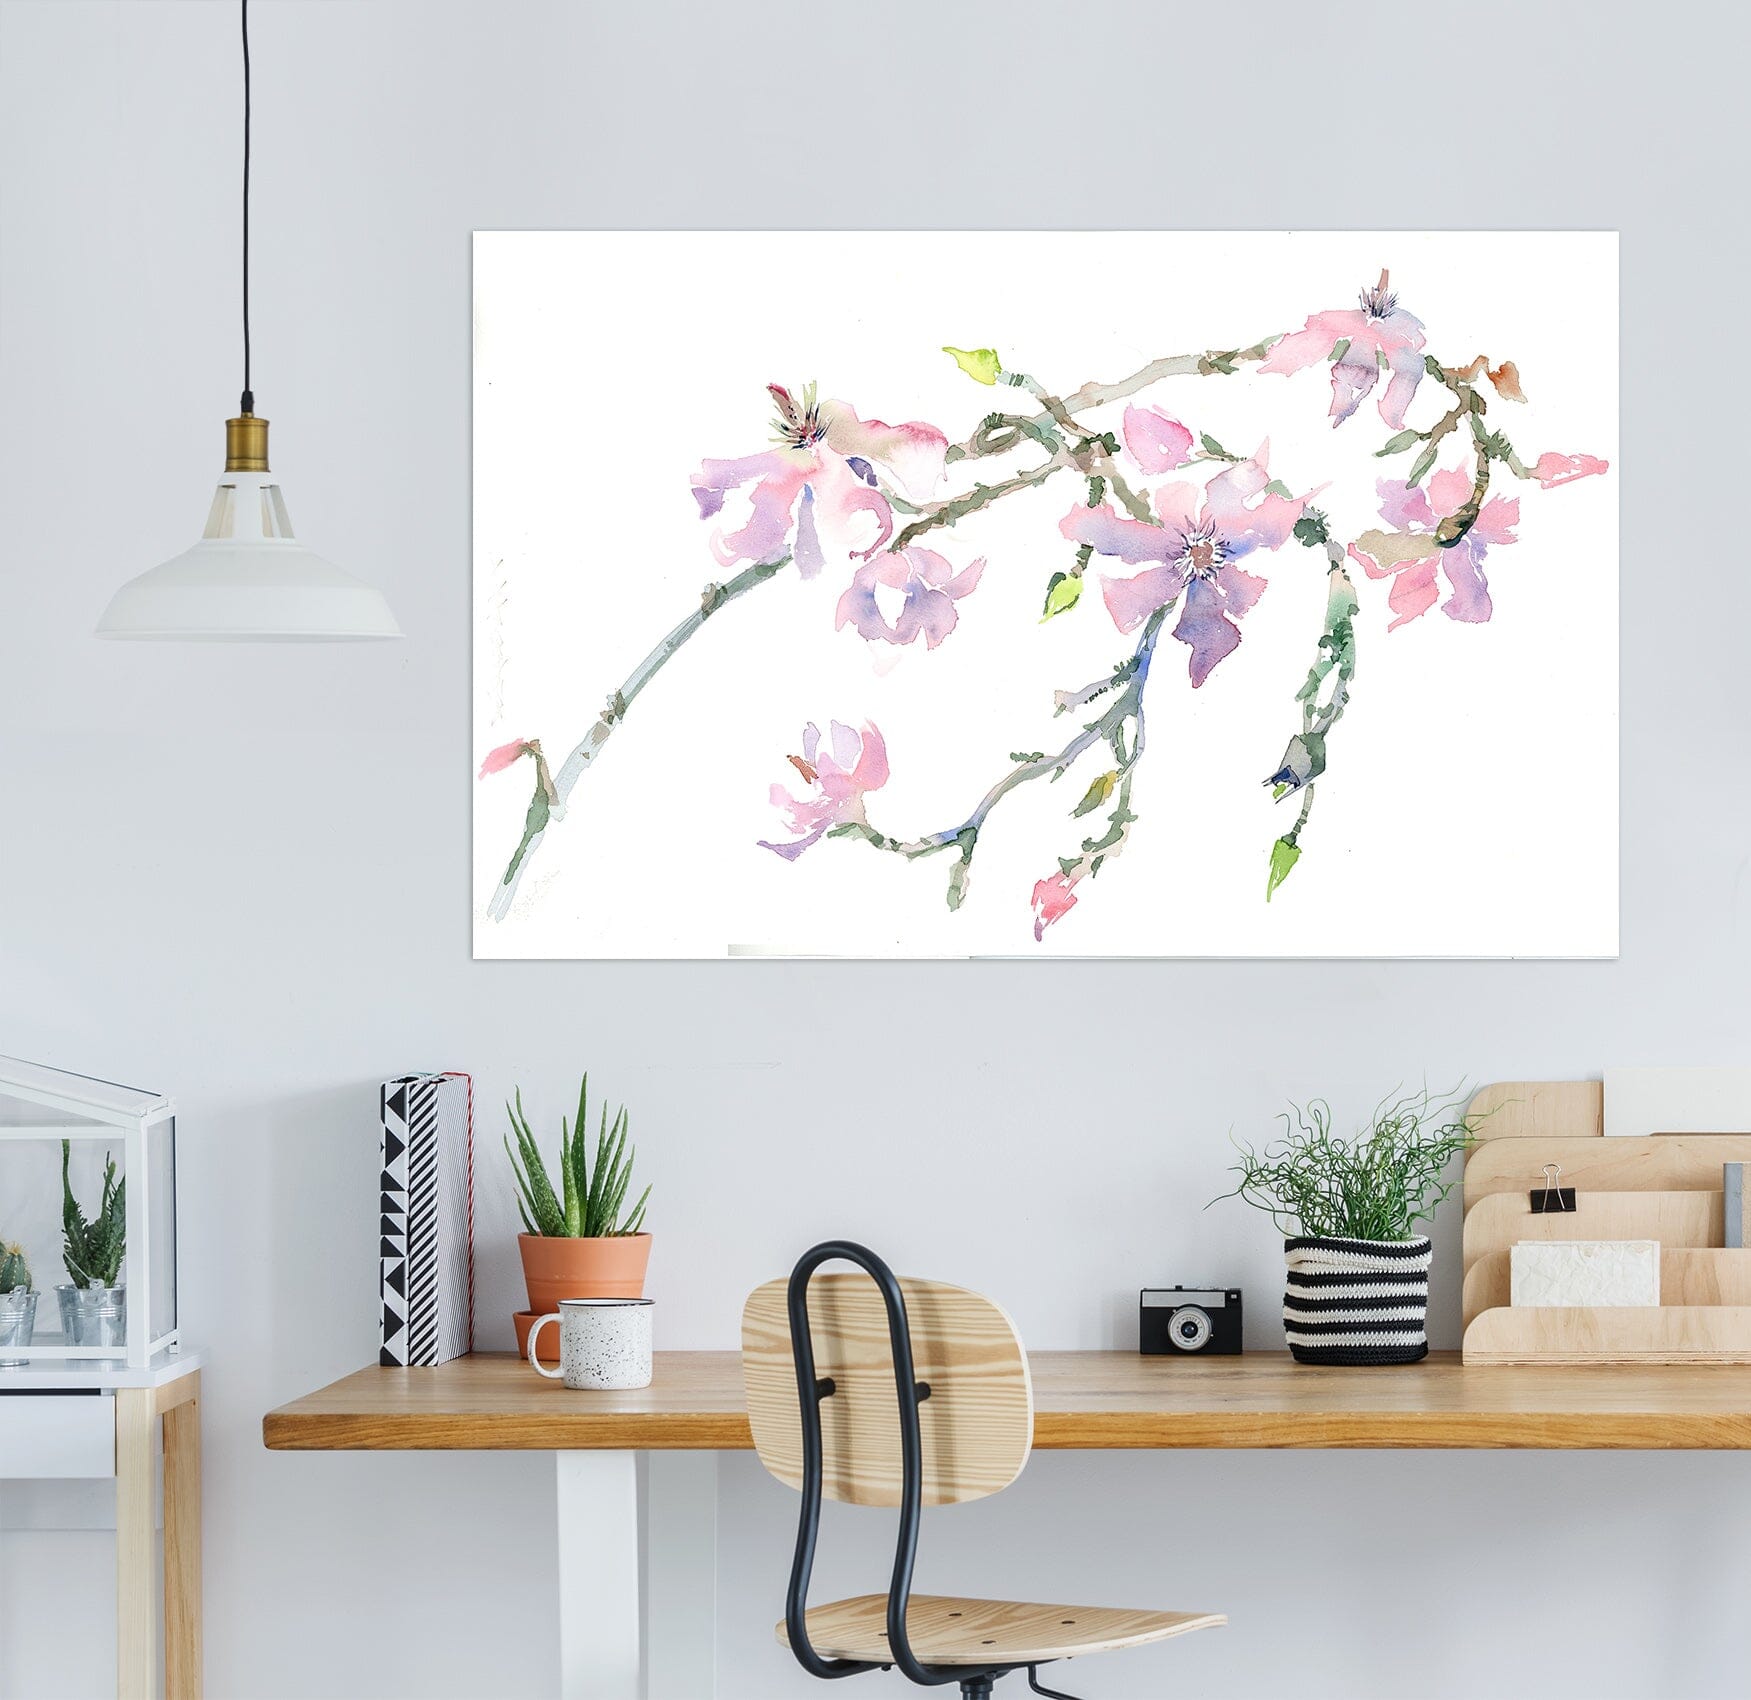 3D Peach Blossom 007 Anne Farrall Doyle Wall Sticker Wallpaper AJ Wallpaper 2 